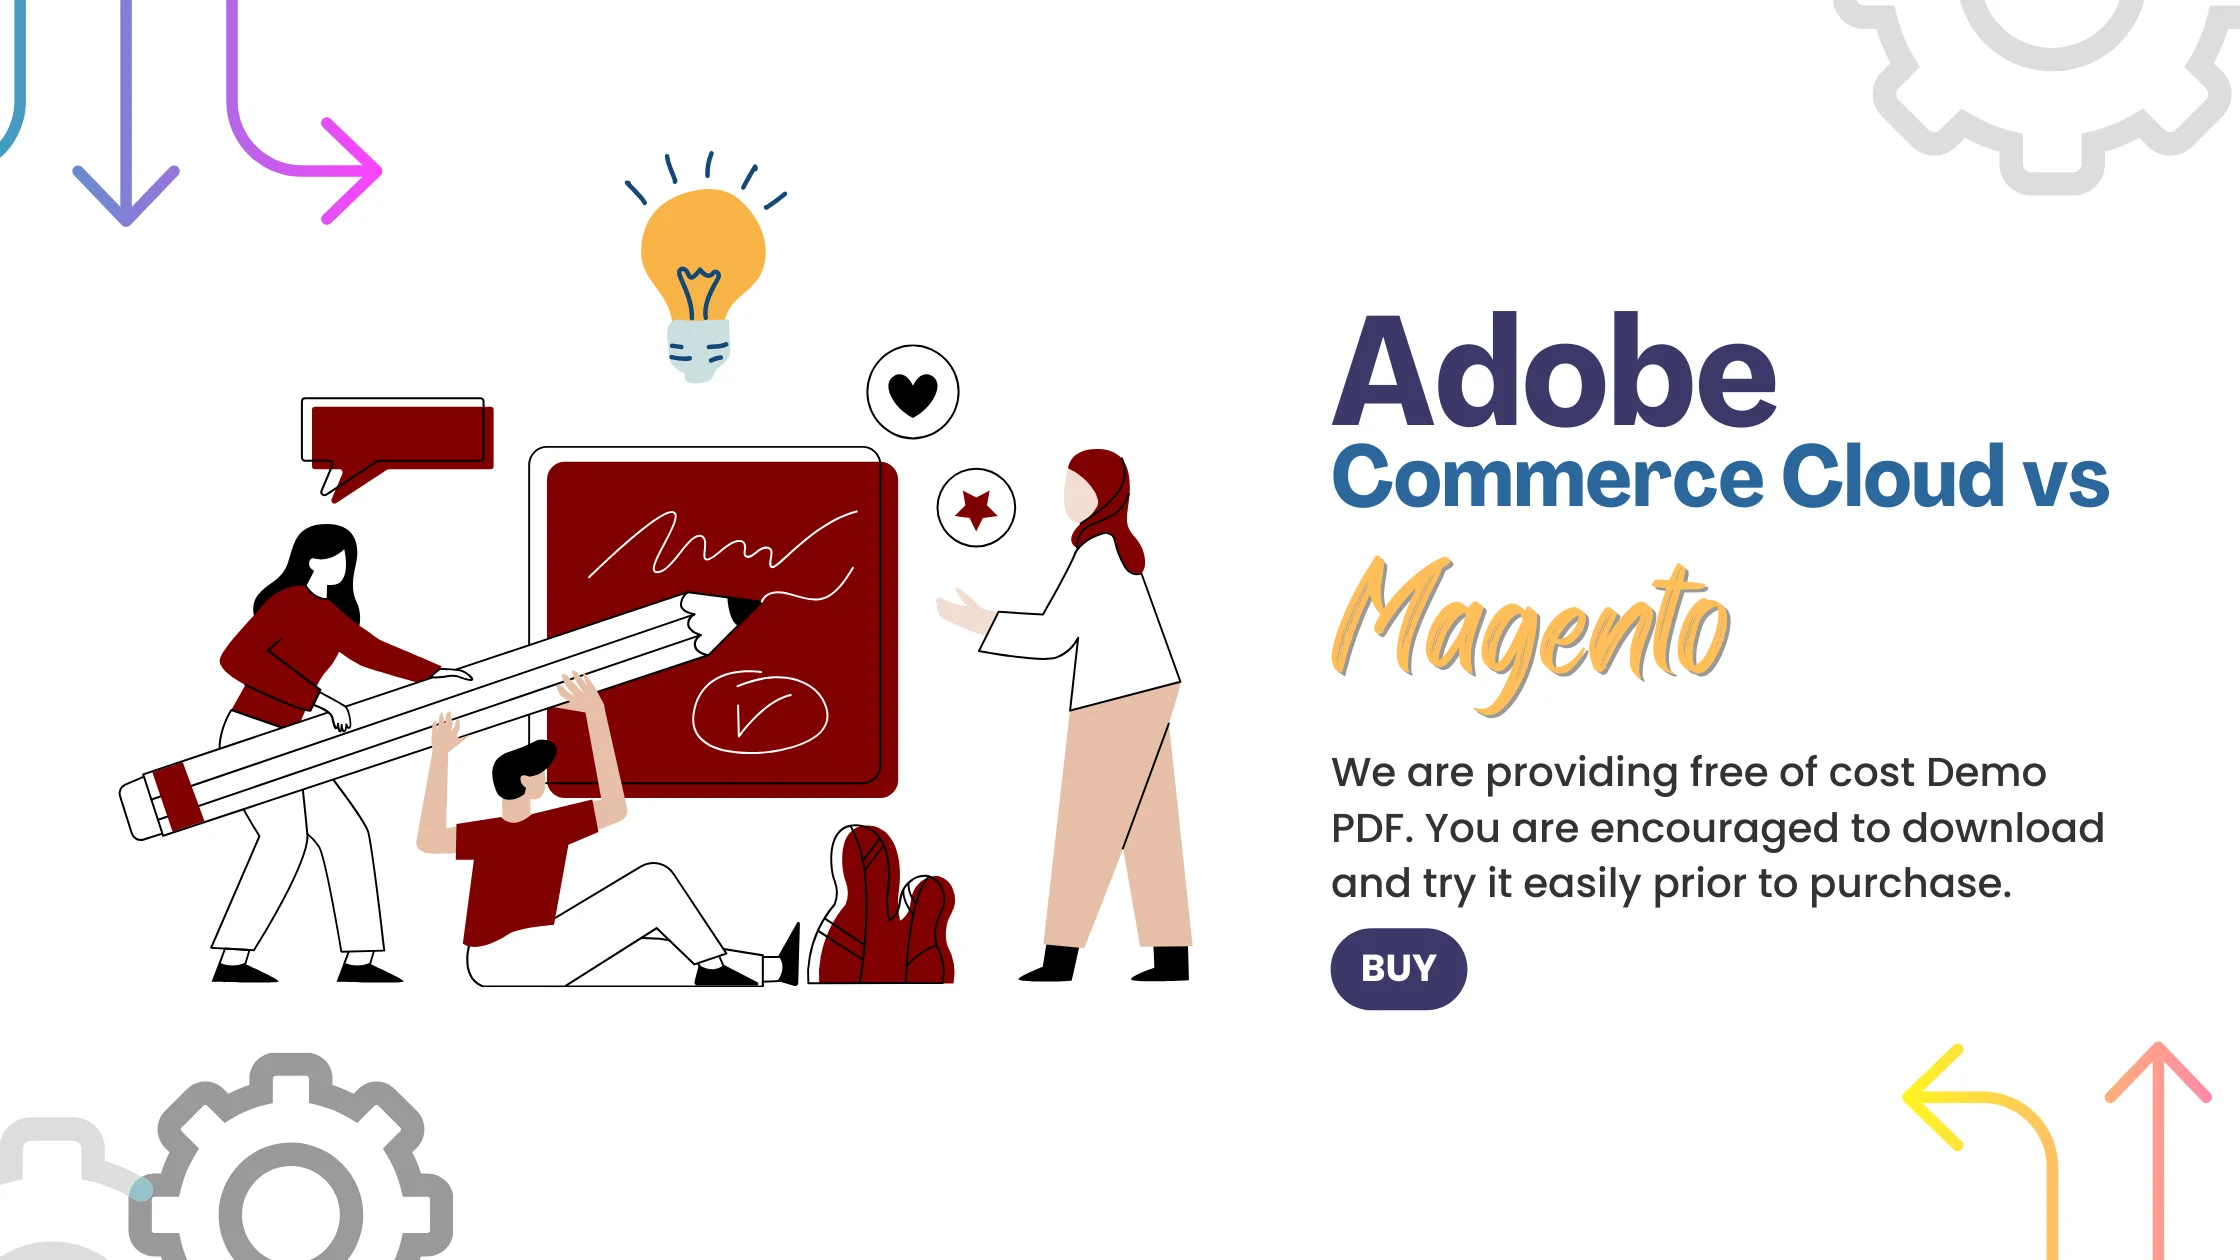 Adobe Commerce Cloud vs Magento promotion